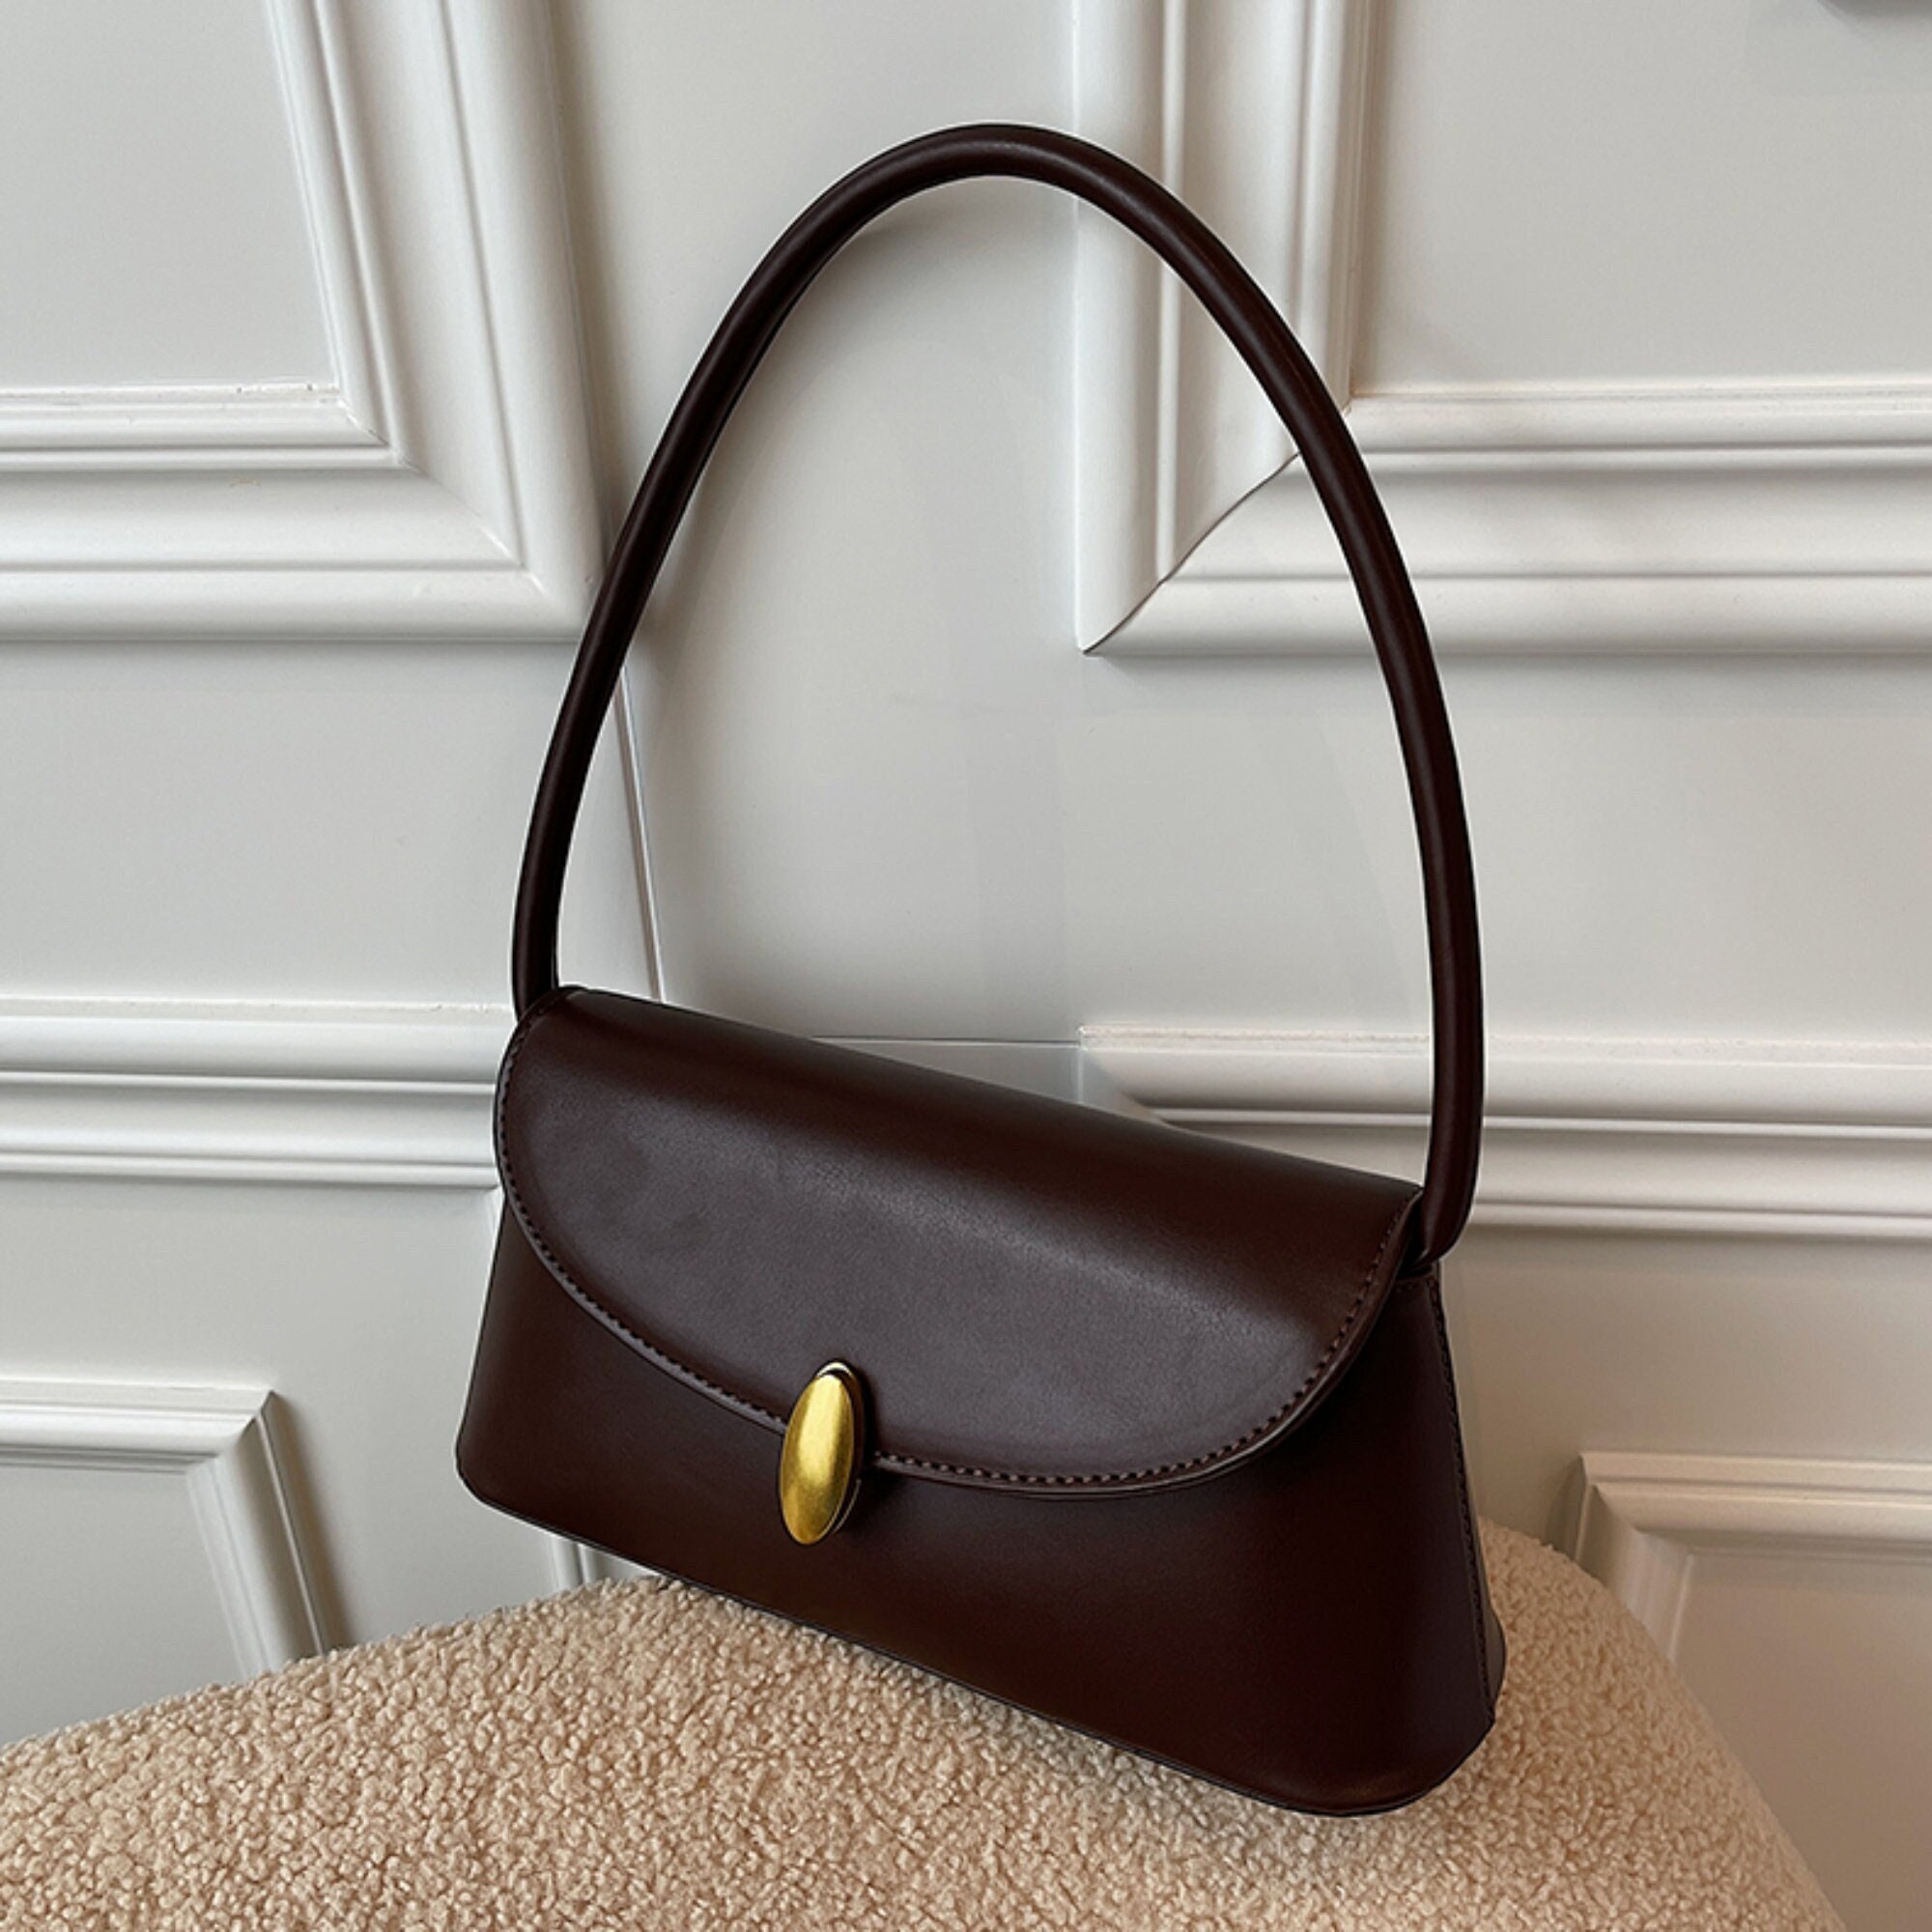 Jayda Shoulder Bag has a sleek, minimal silhouette that calls to mind